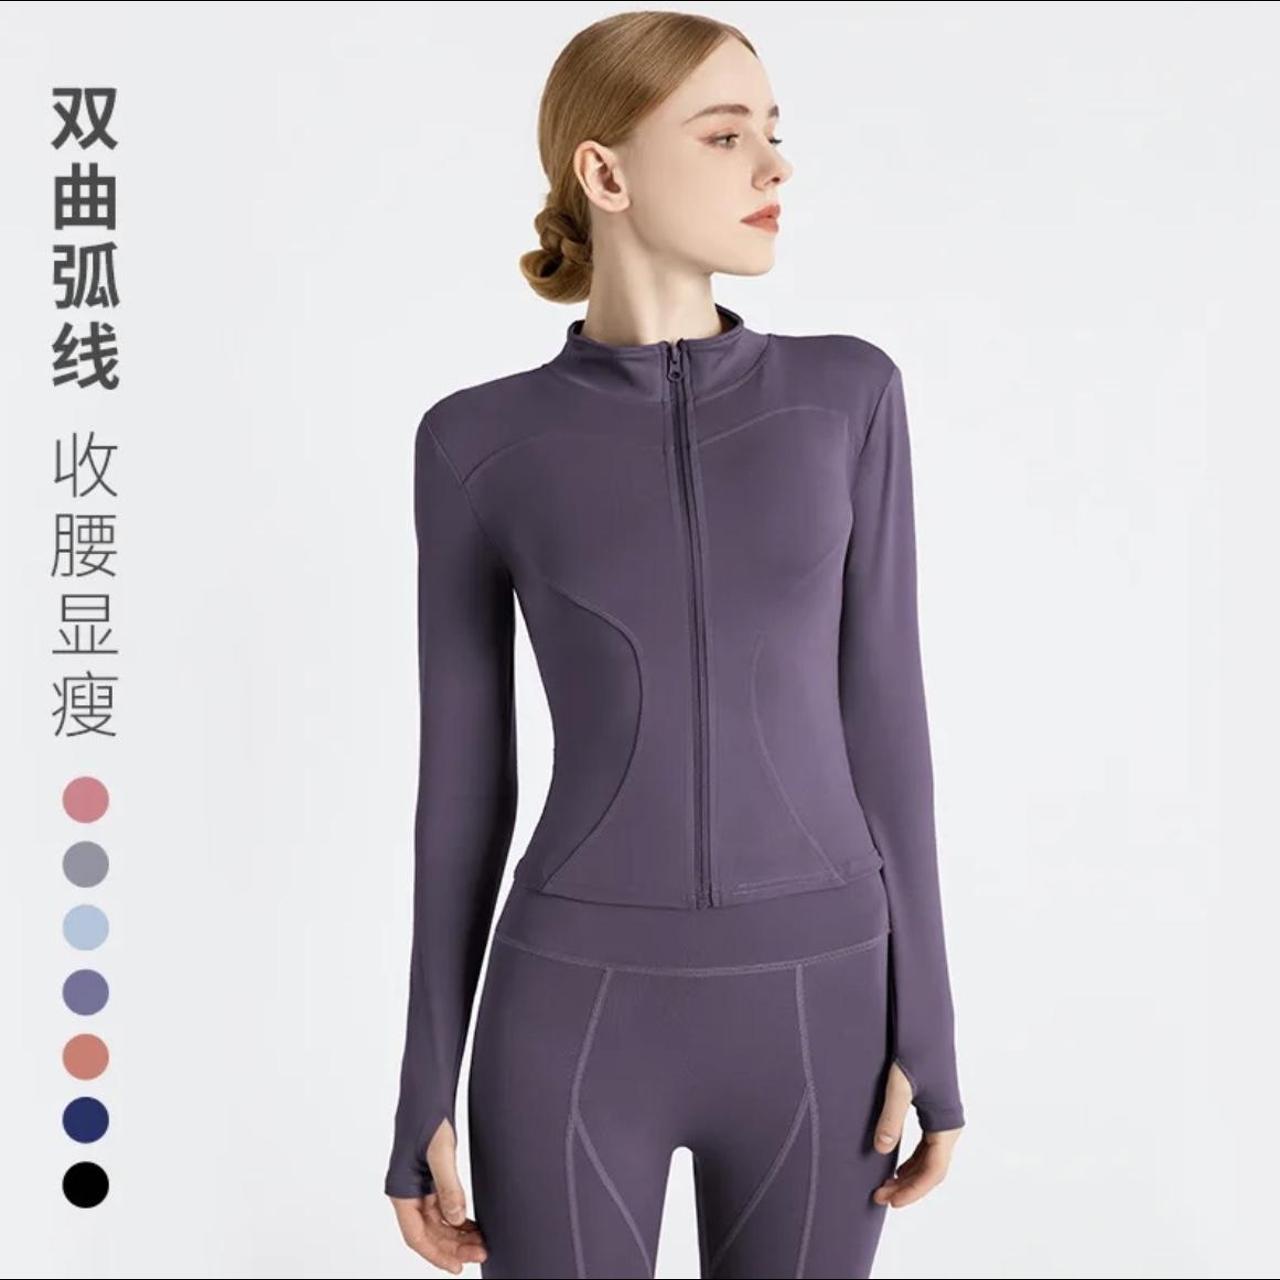 bbl jacket - purple - xl (asian size | fits... - Depop